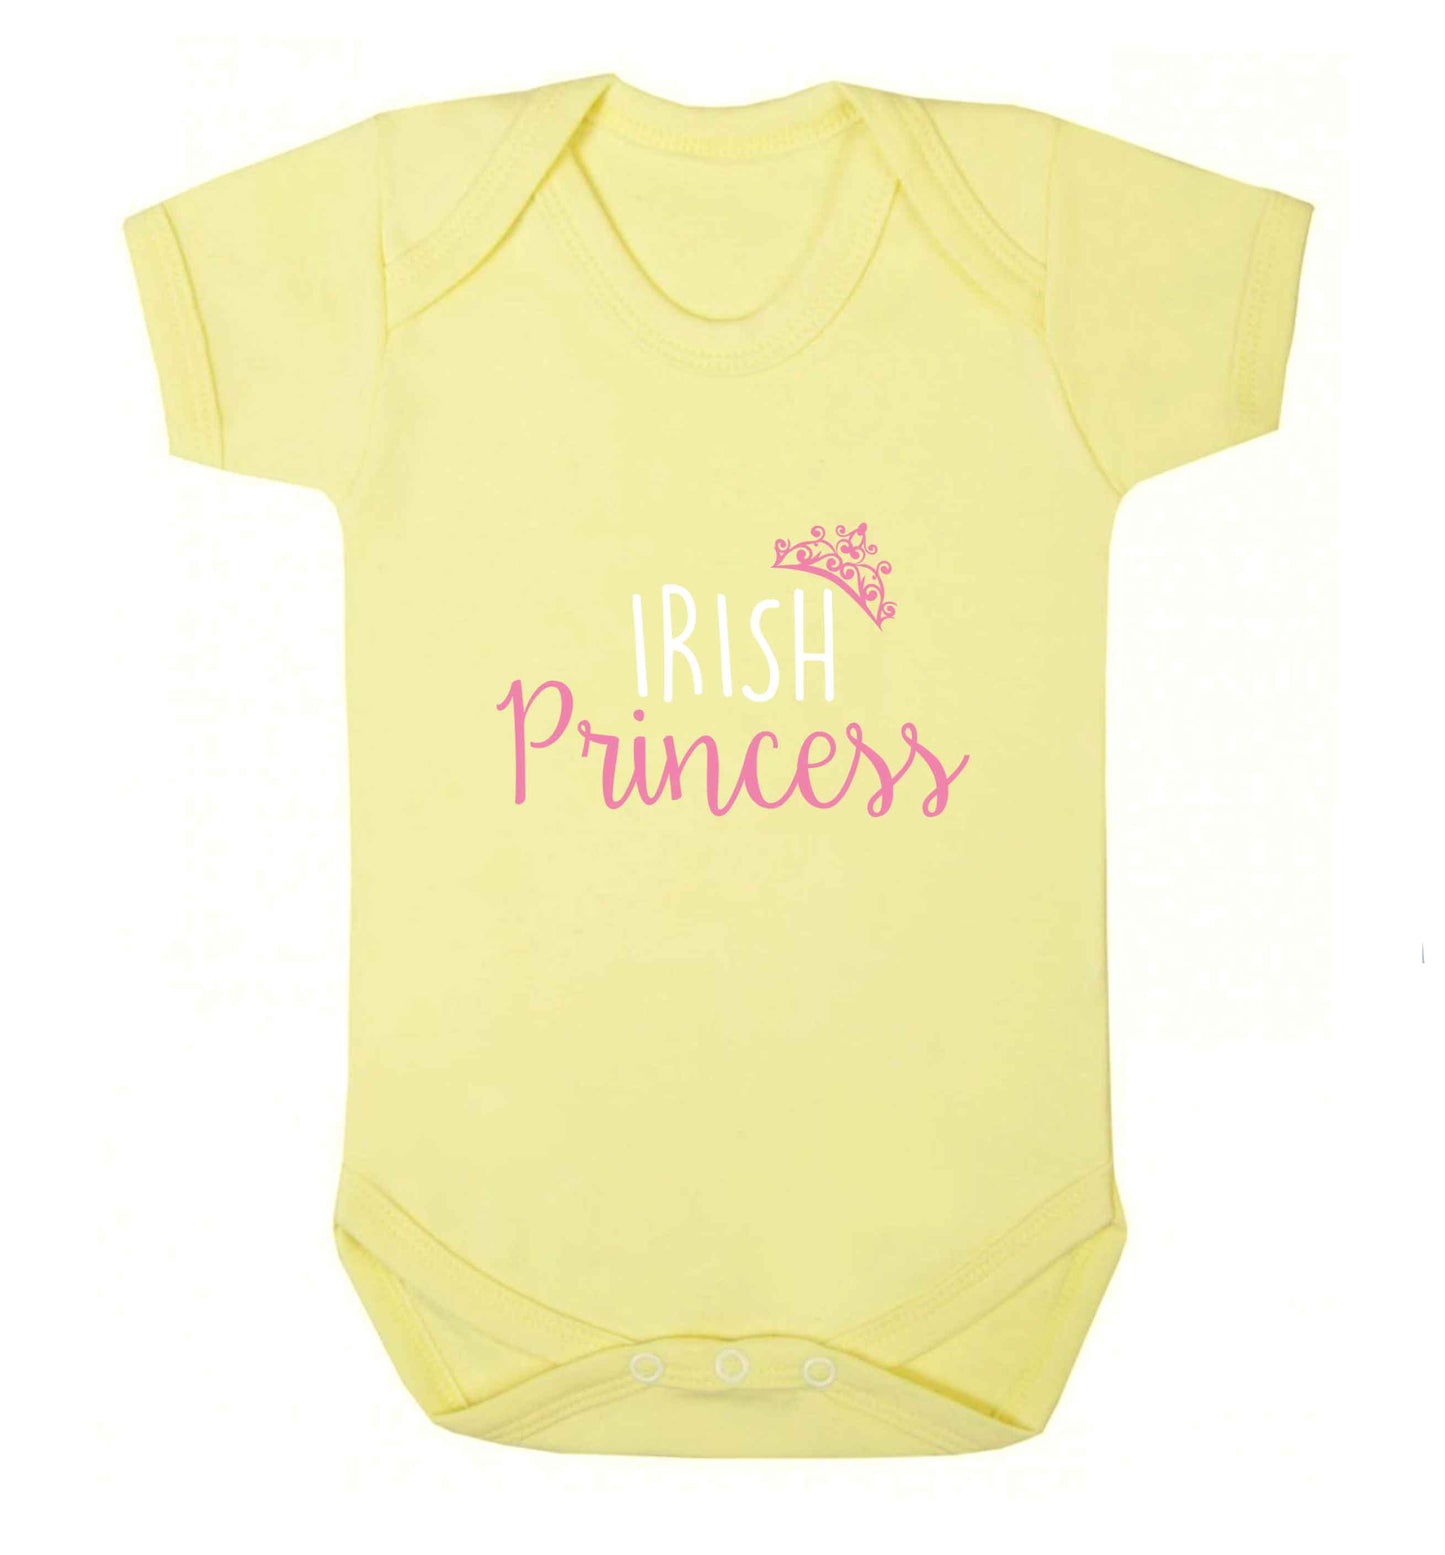 Irish princess baby vest pale yellow 18-24 months